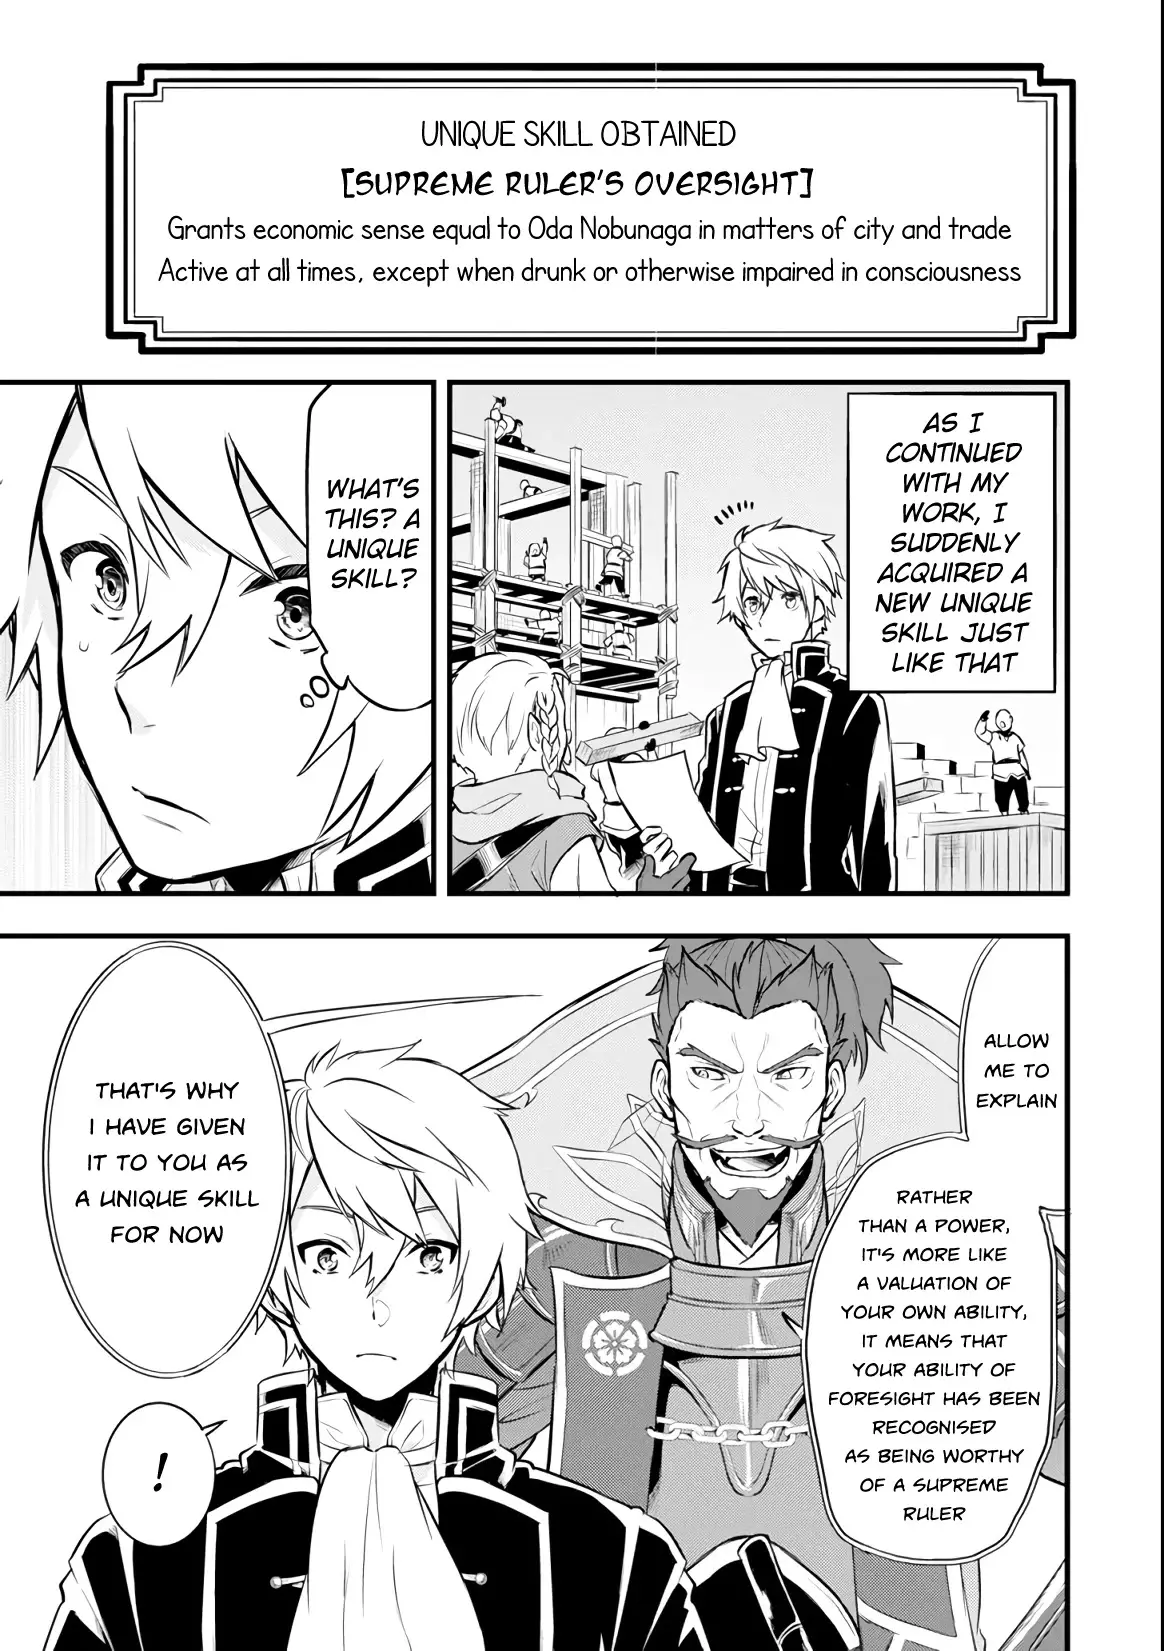 Mysterious Job Called Oda Nobunaga - 10 page 9